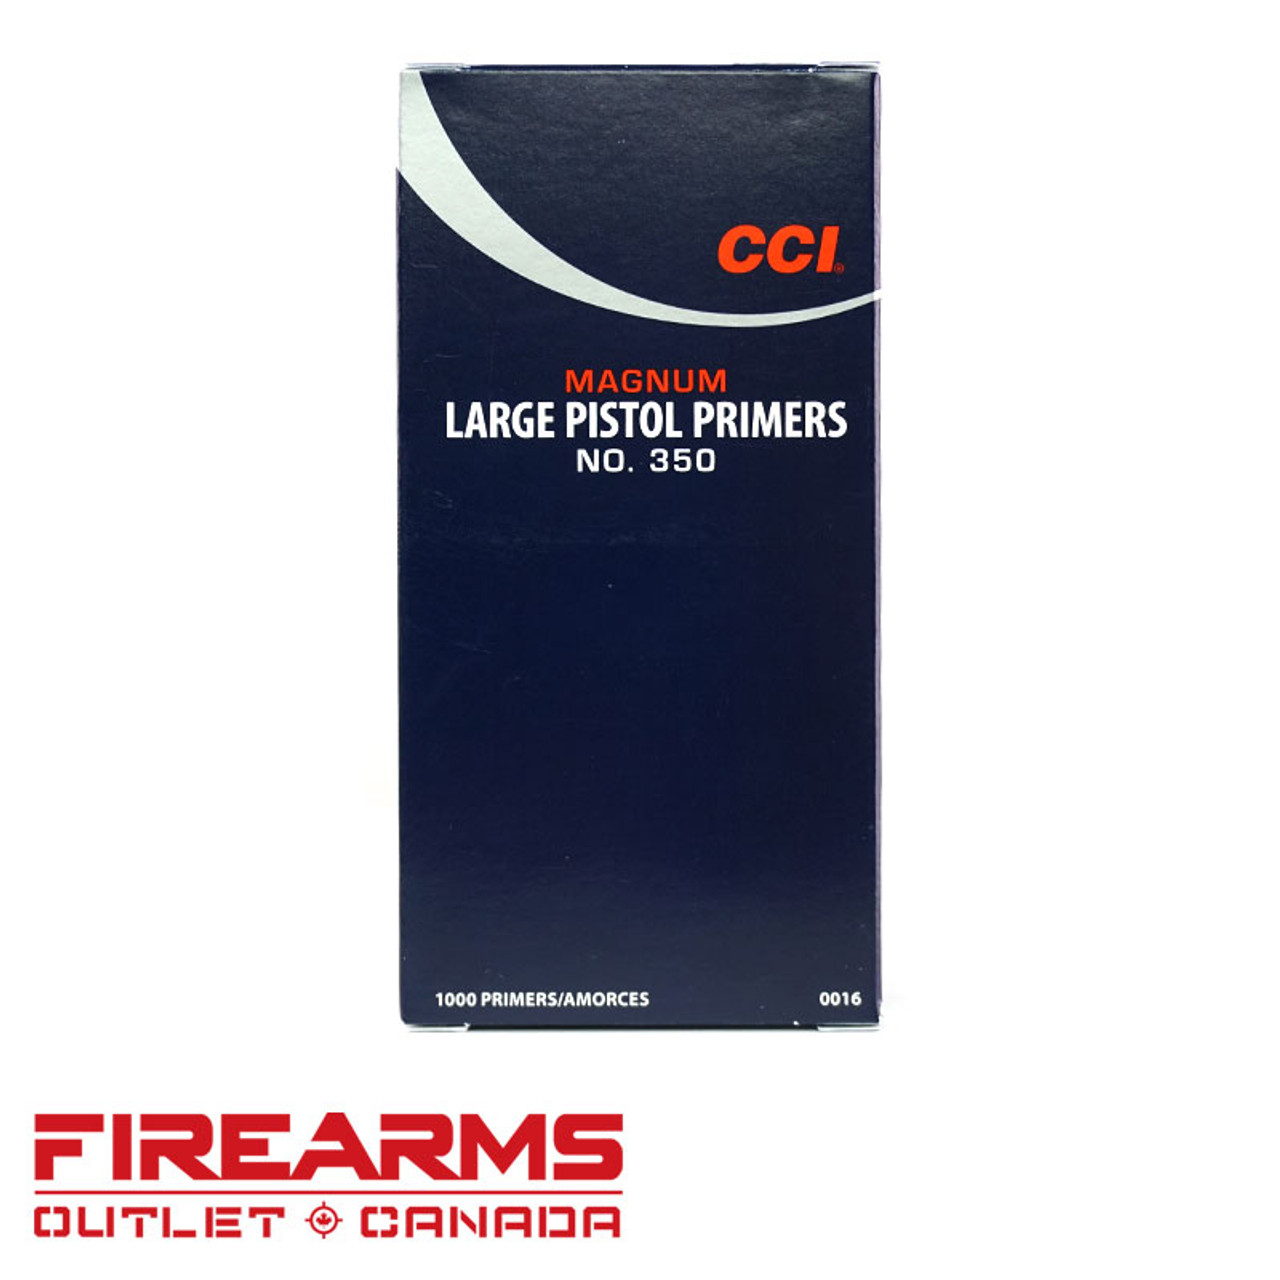 CCI Large Magnum Pistol Primers, No. 350, Box of 1,000